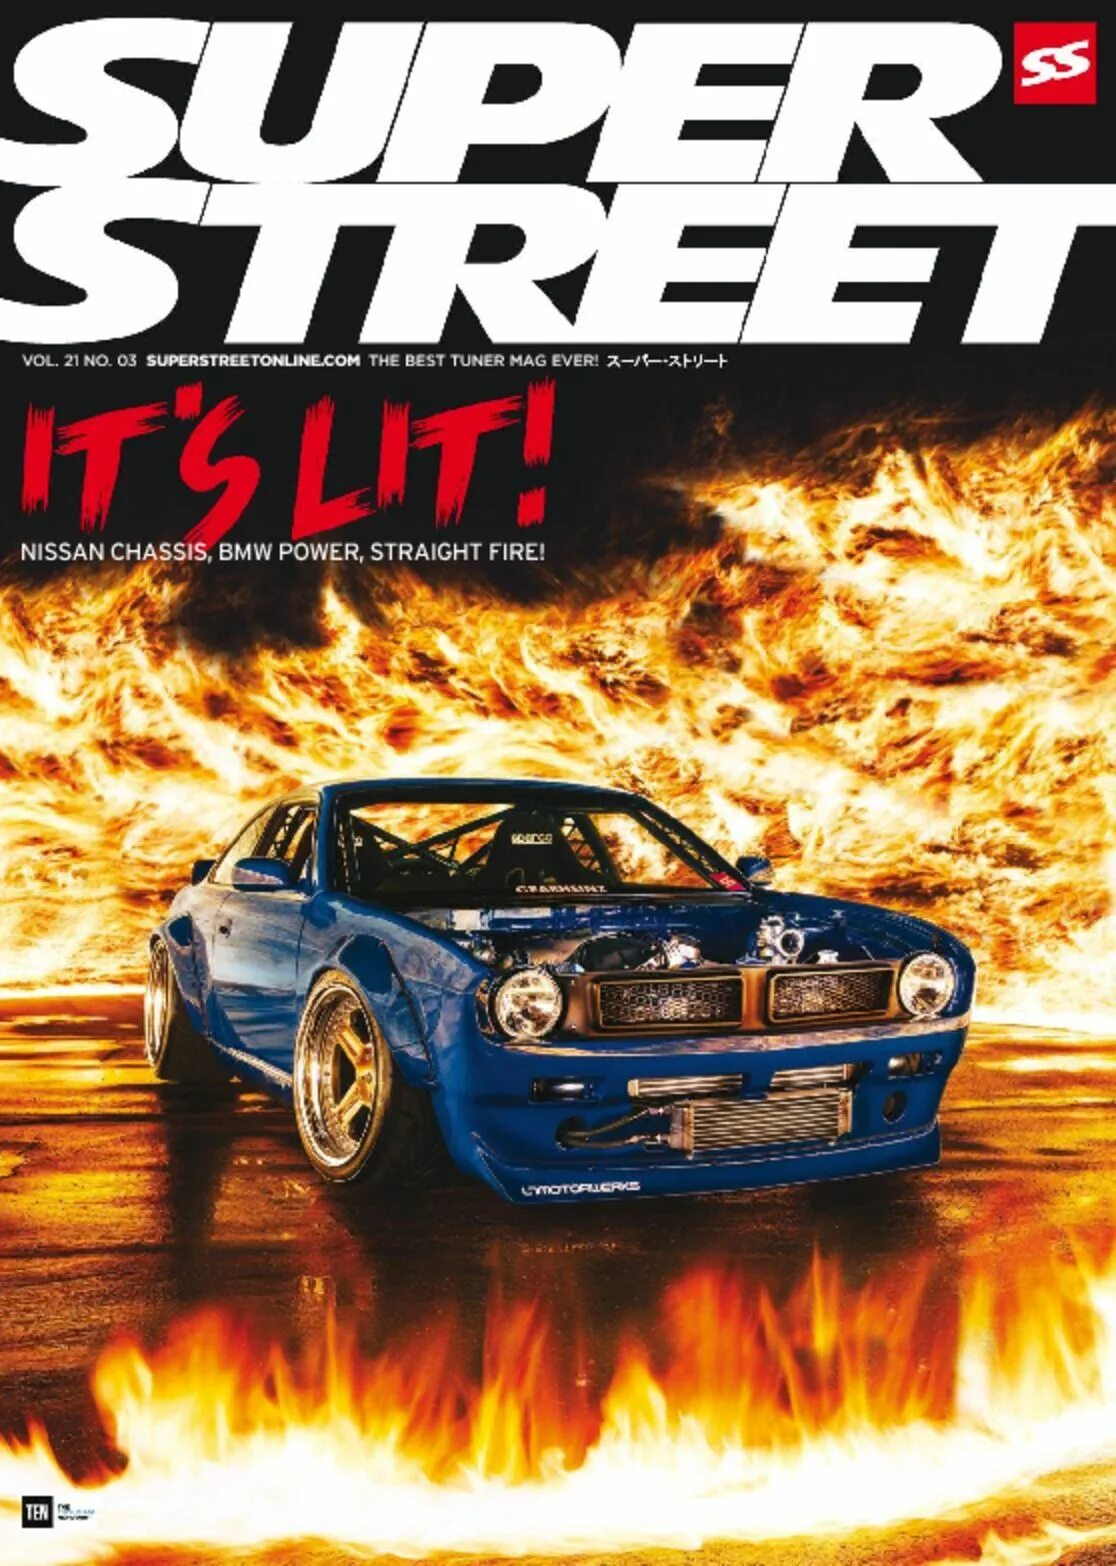 Super magazine. Super Street. Super журнал. Street Magazine. Журнал супер гонки.